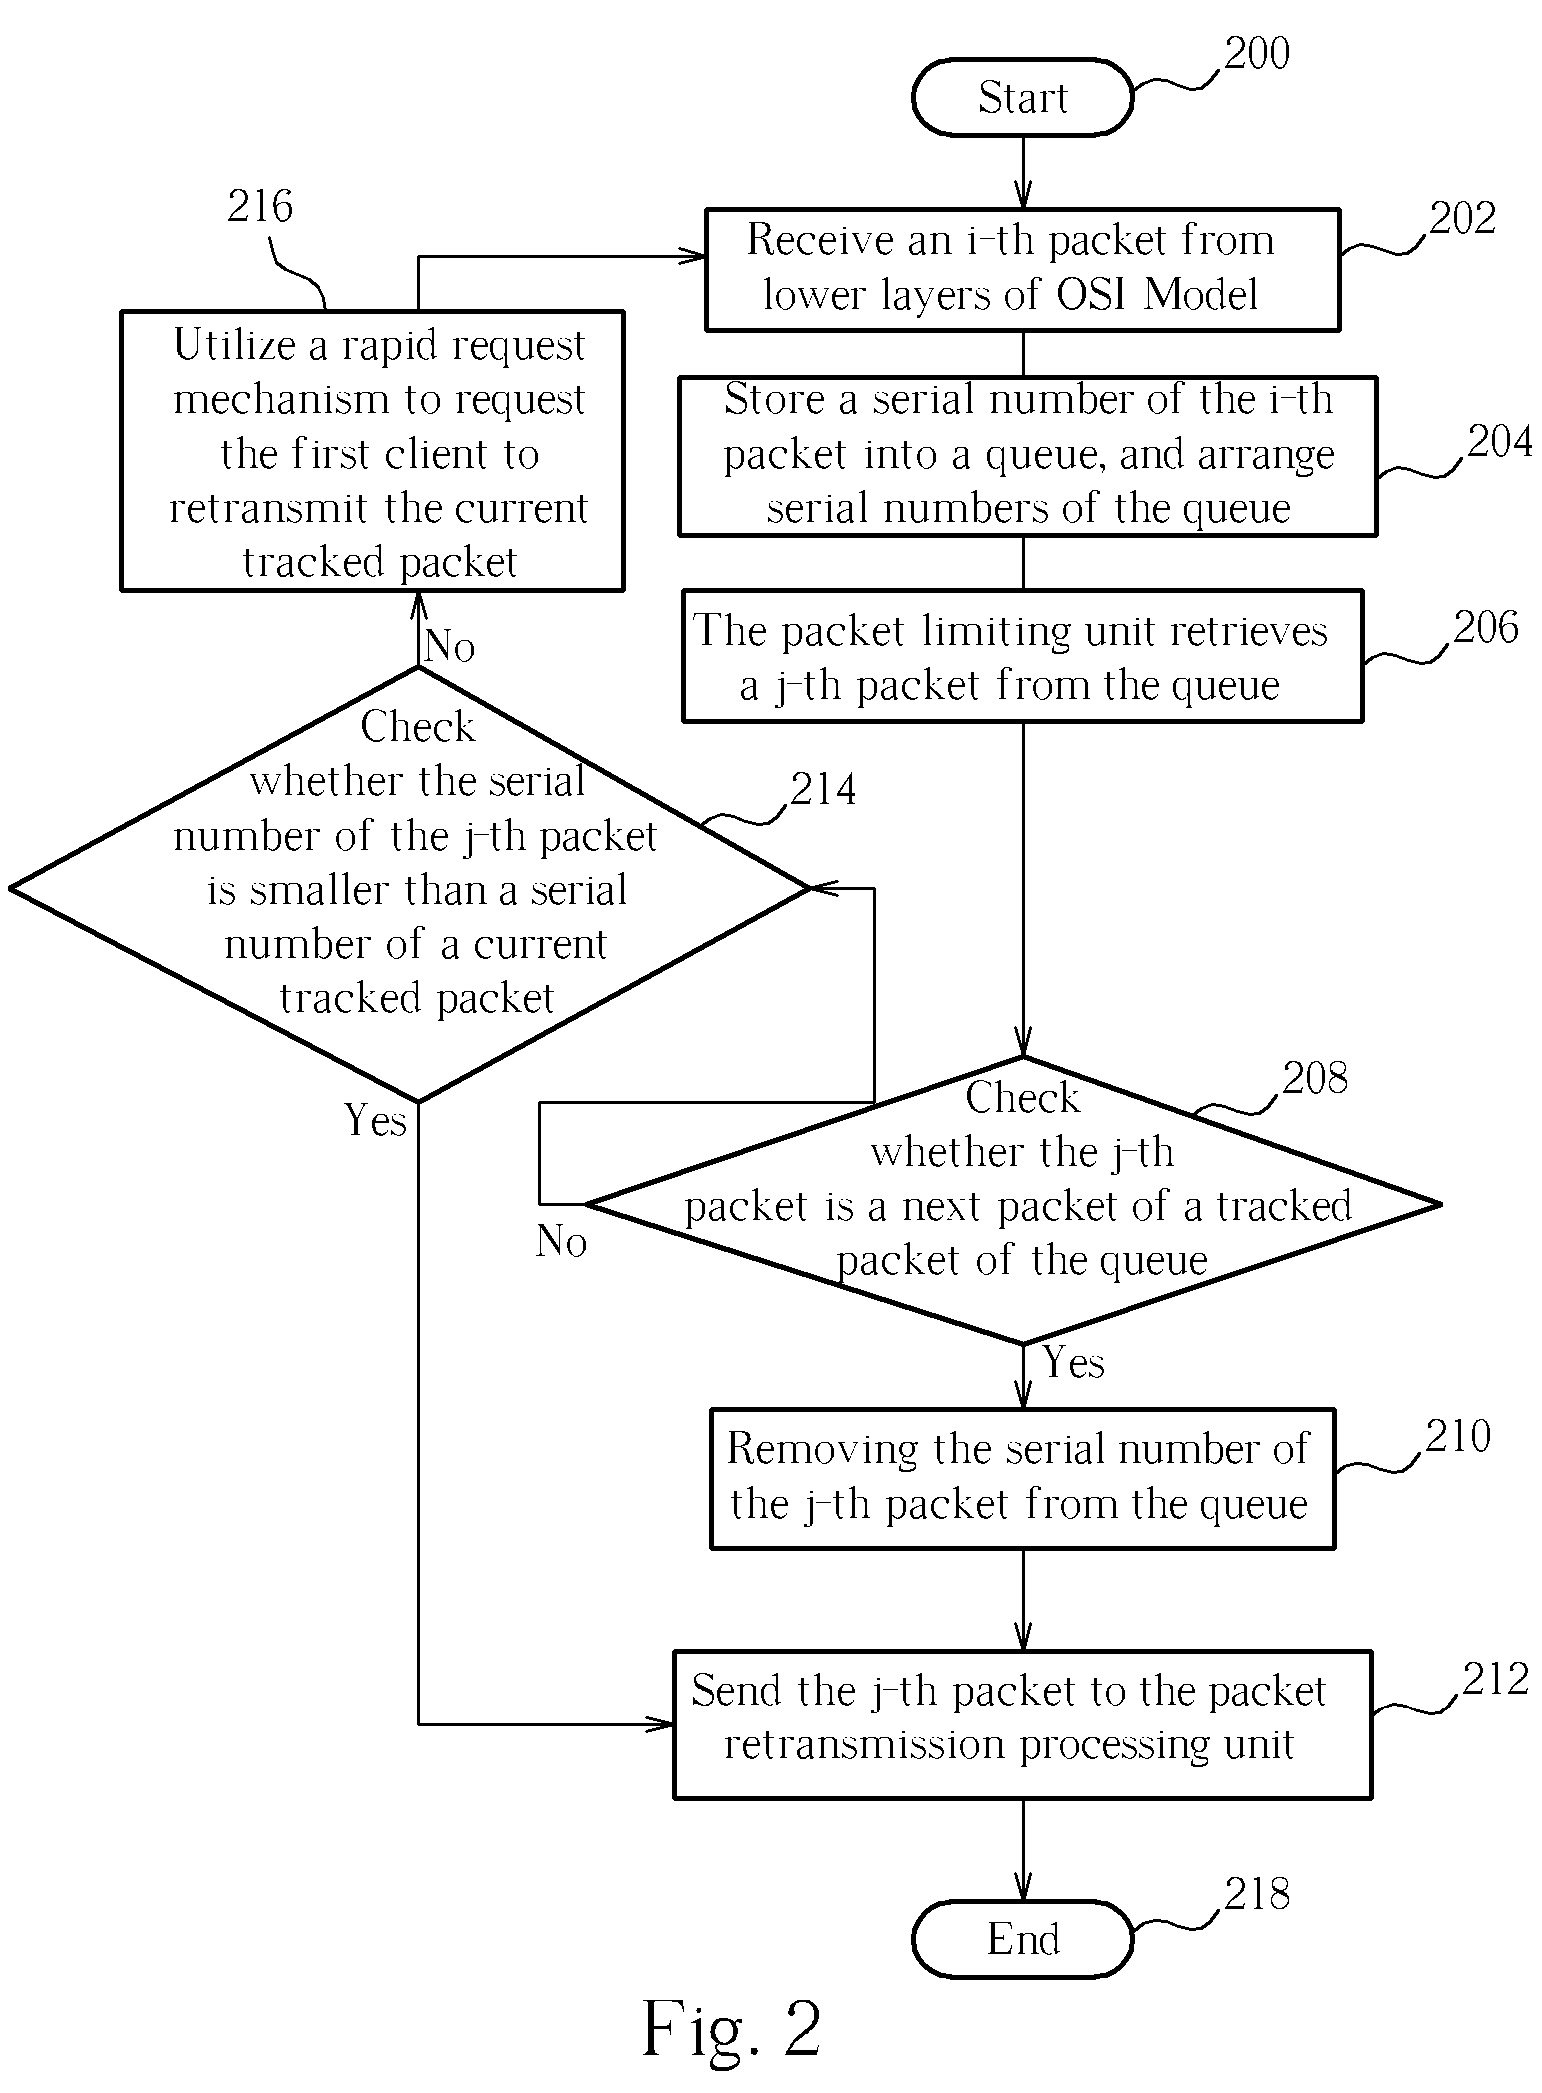 Network flow/stream simulation method